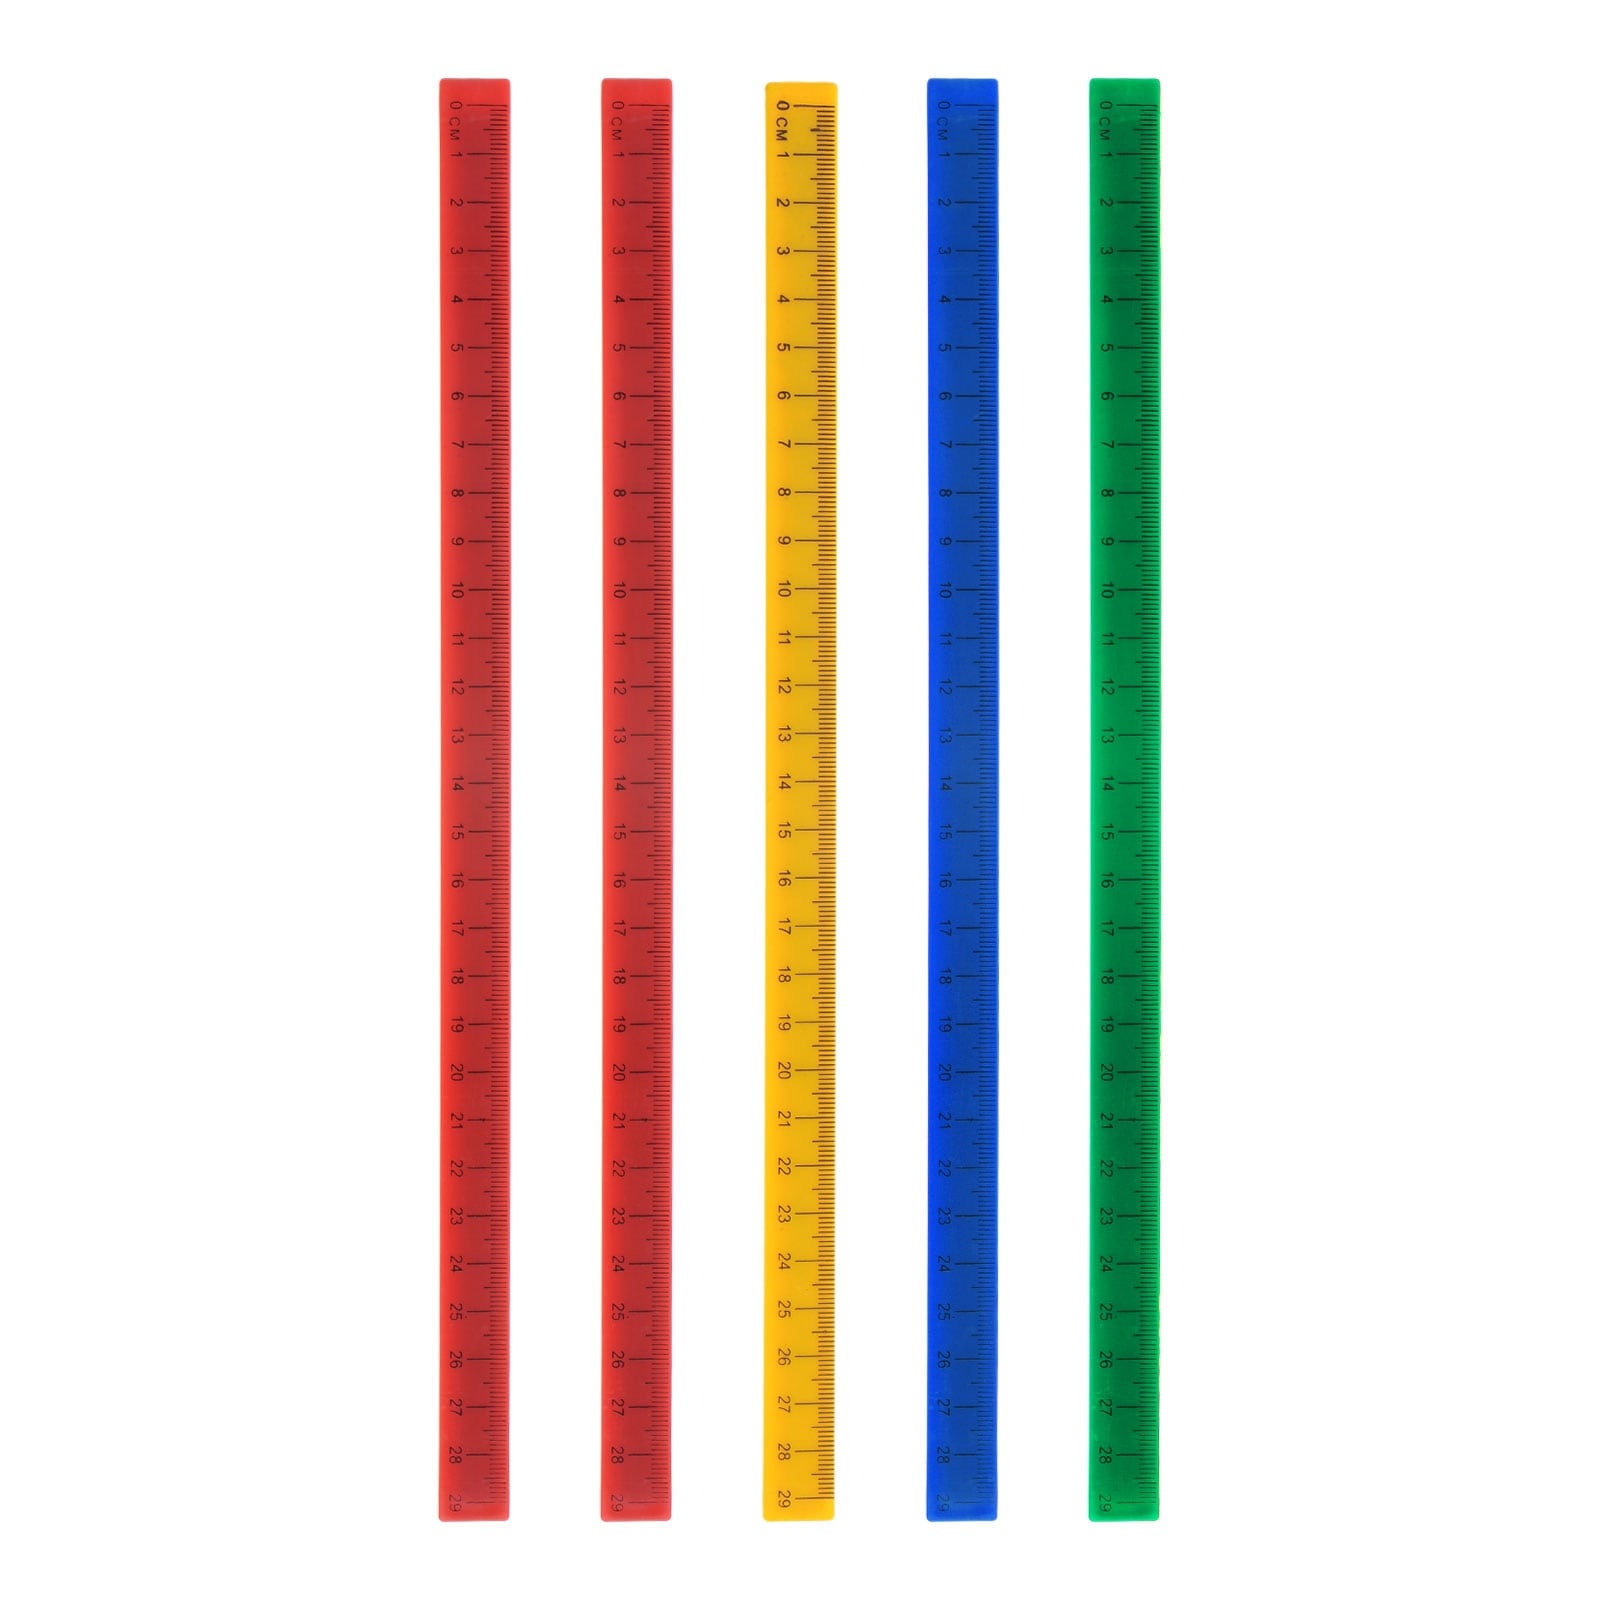 5pcs Whiteboard Magnetic Ruler 29cm Metric Blackboard Straight Rulers - Multicolor